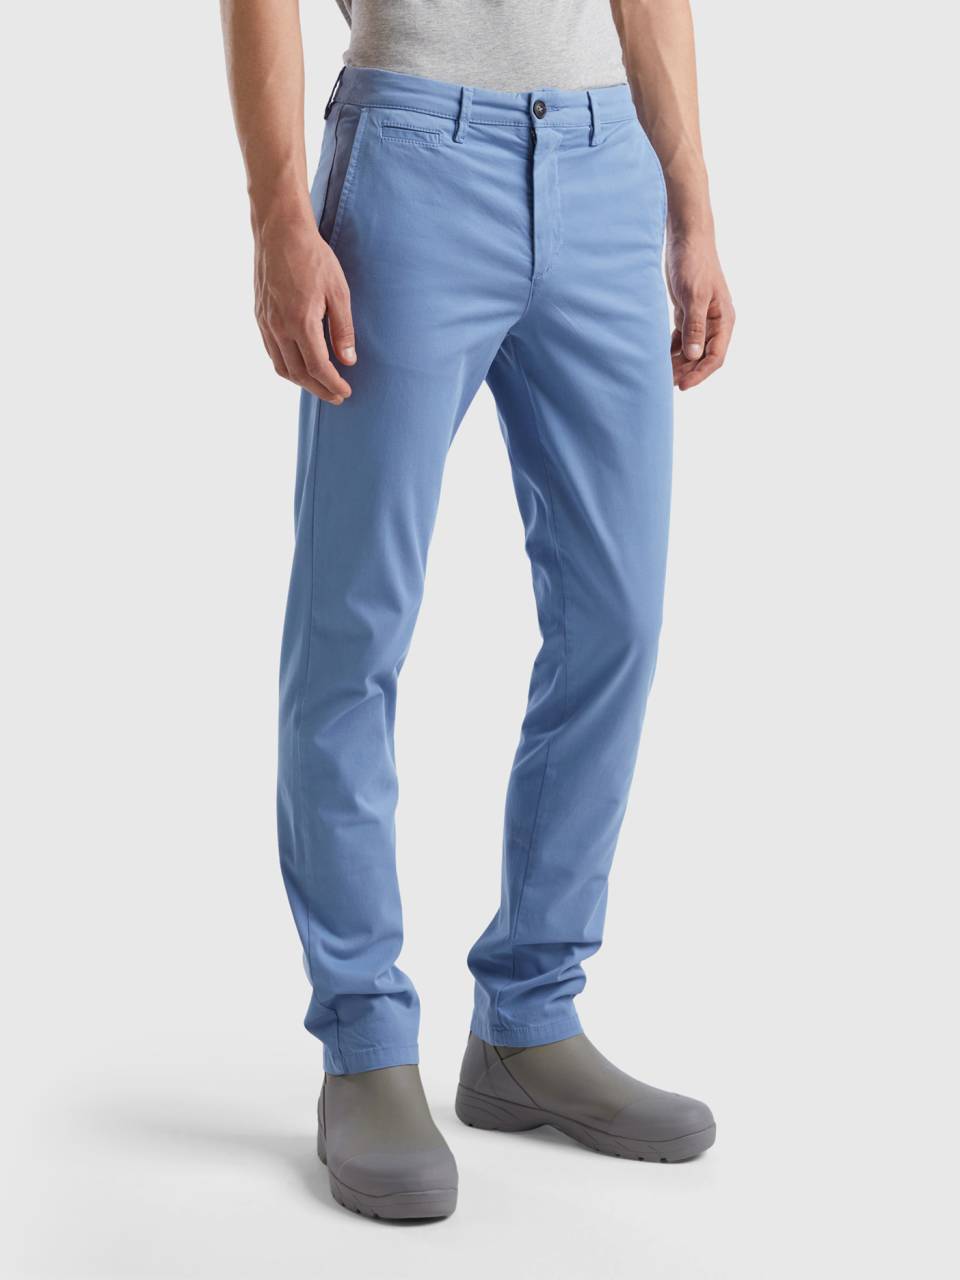 Blue Chino Pants – El Capote